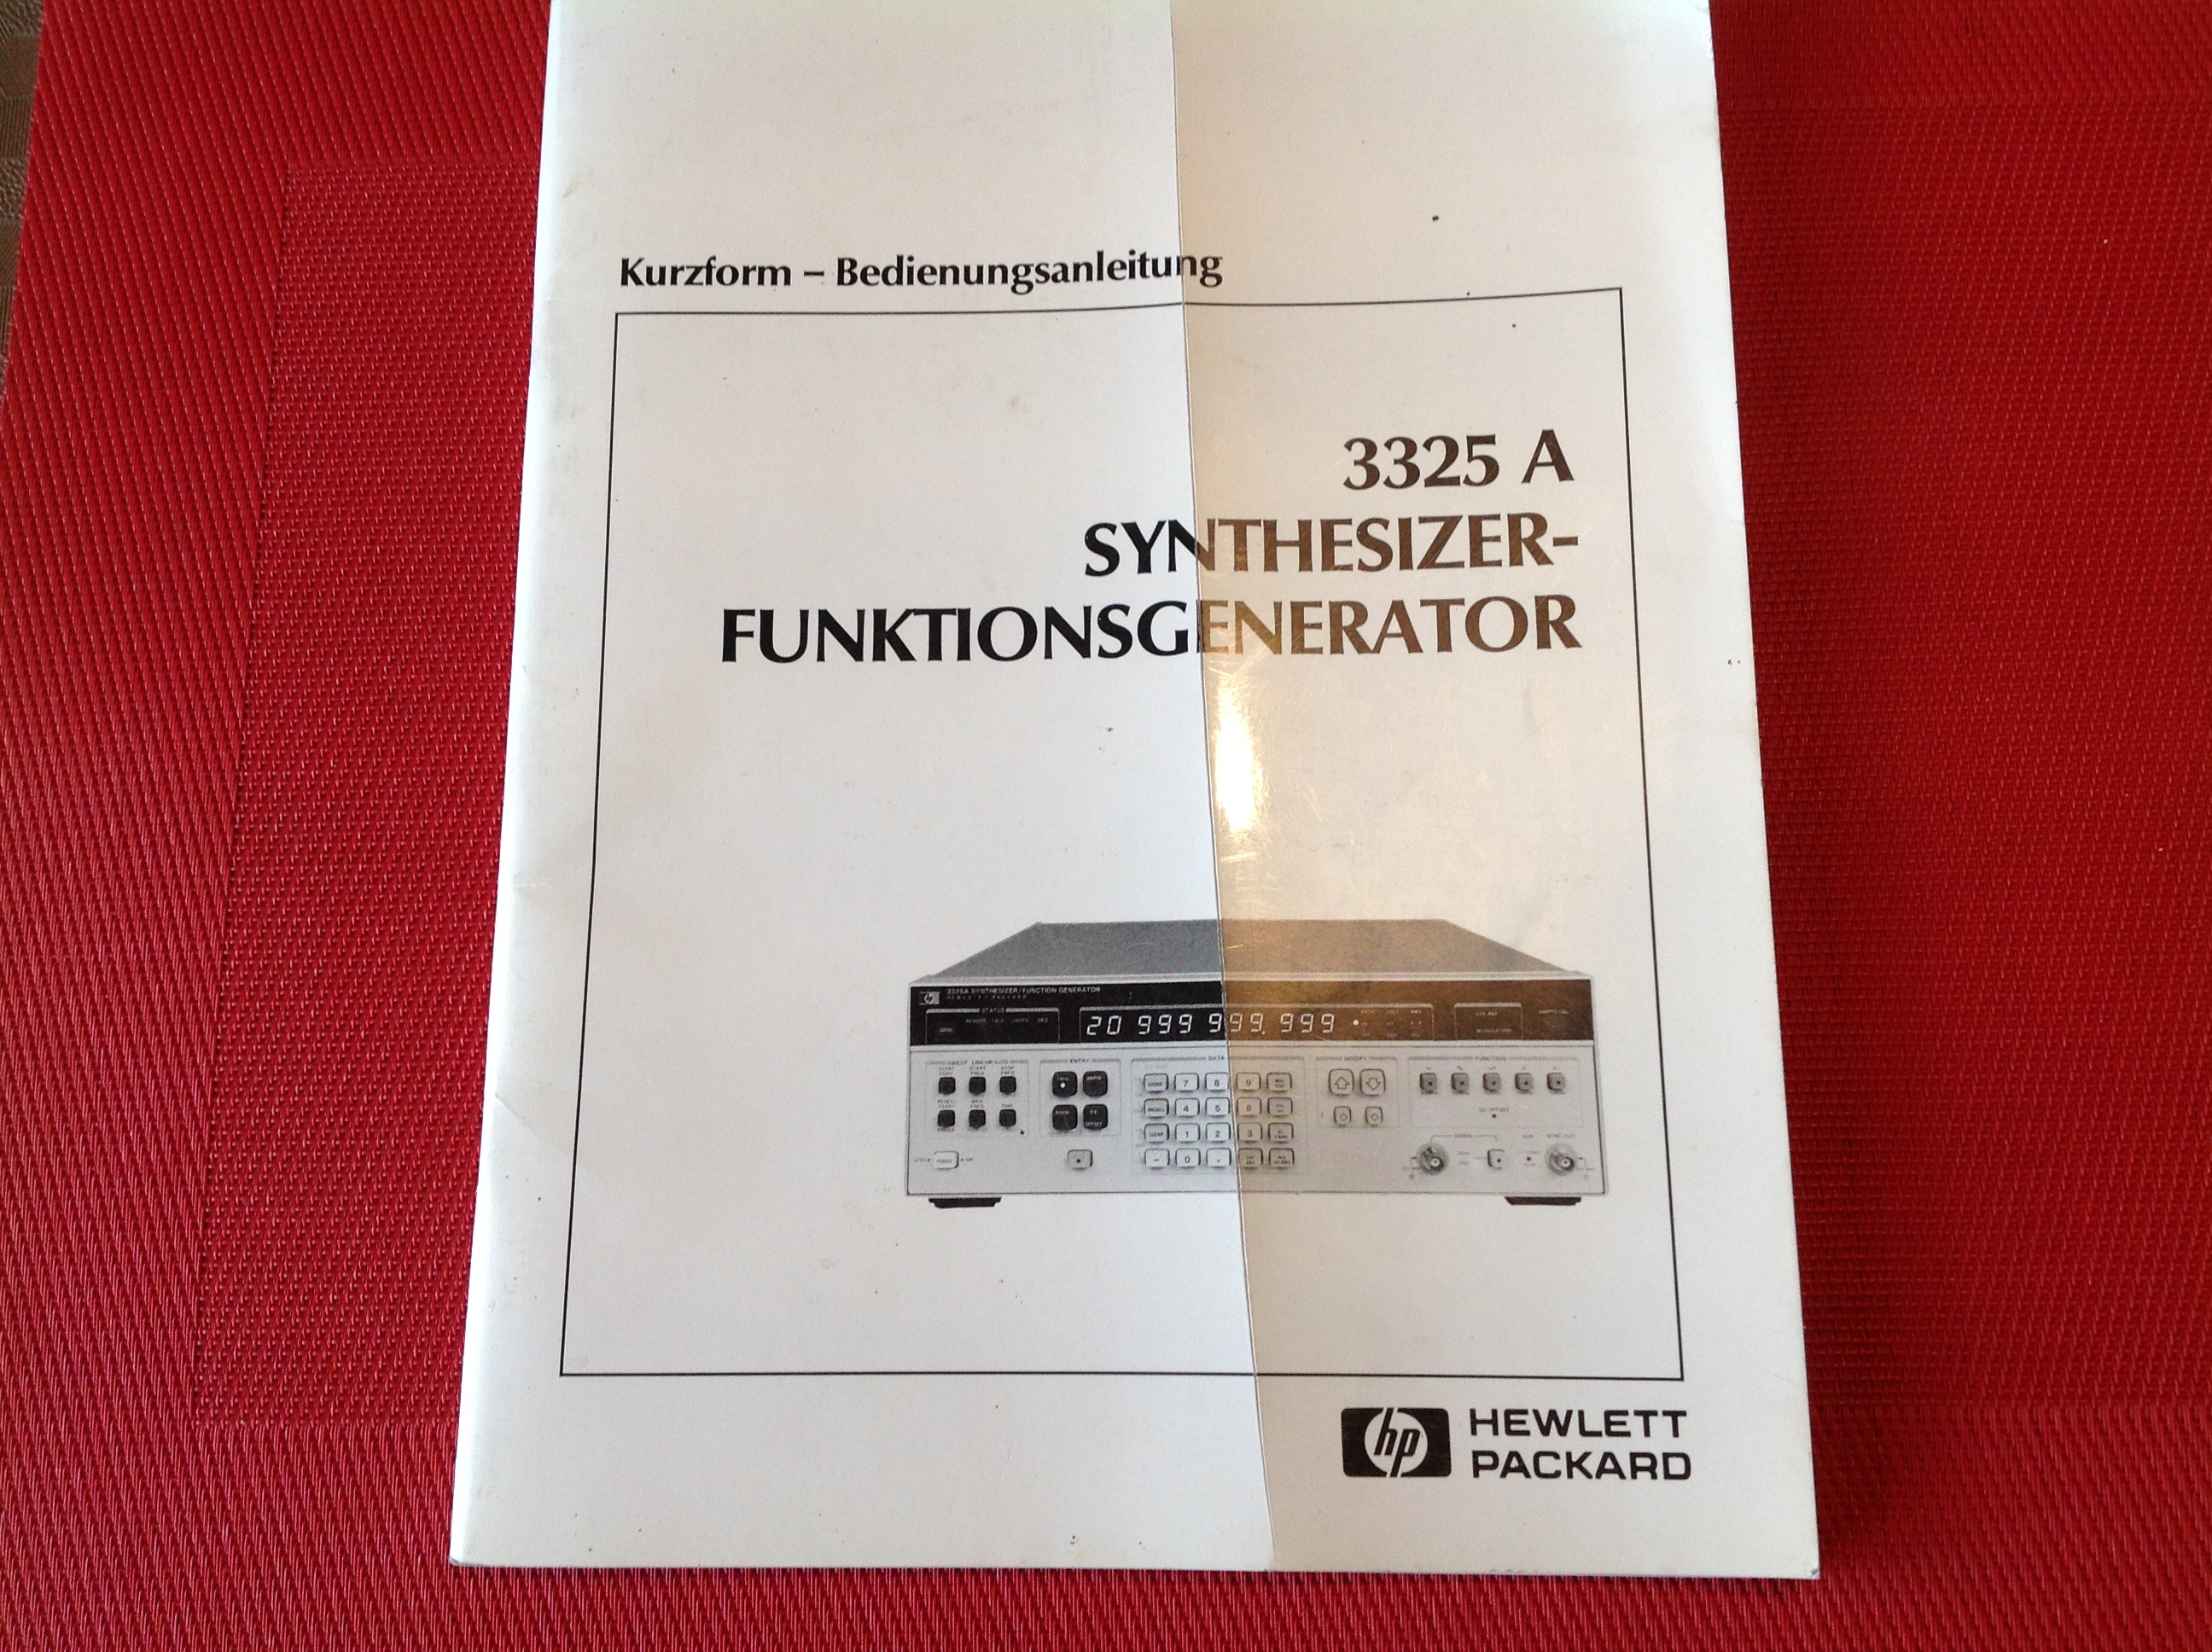 Hewlett Packard 3325A Synthesizer-Funktionsgenerator Kurzform-Bedienungsanleitung